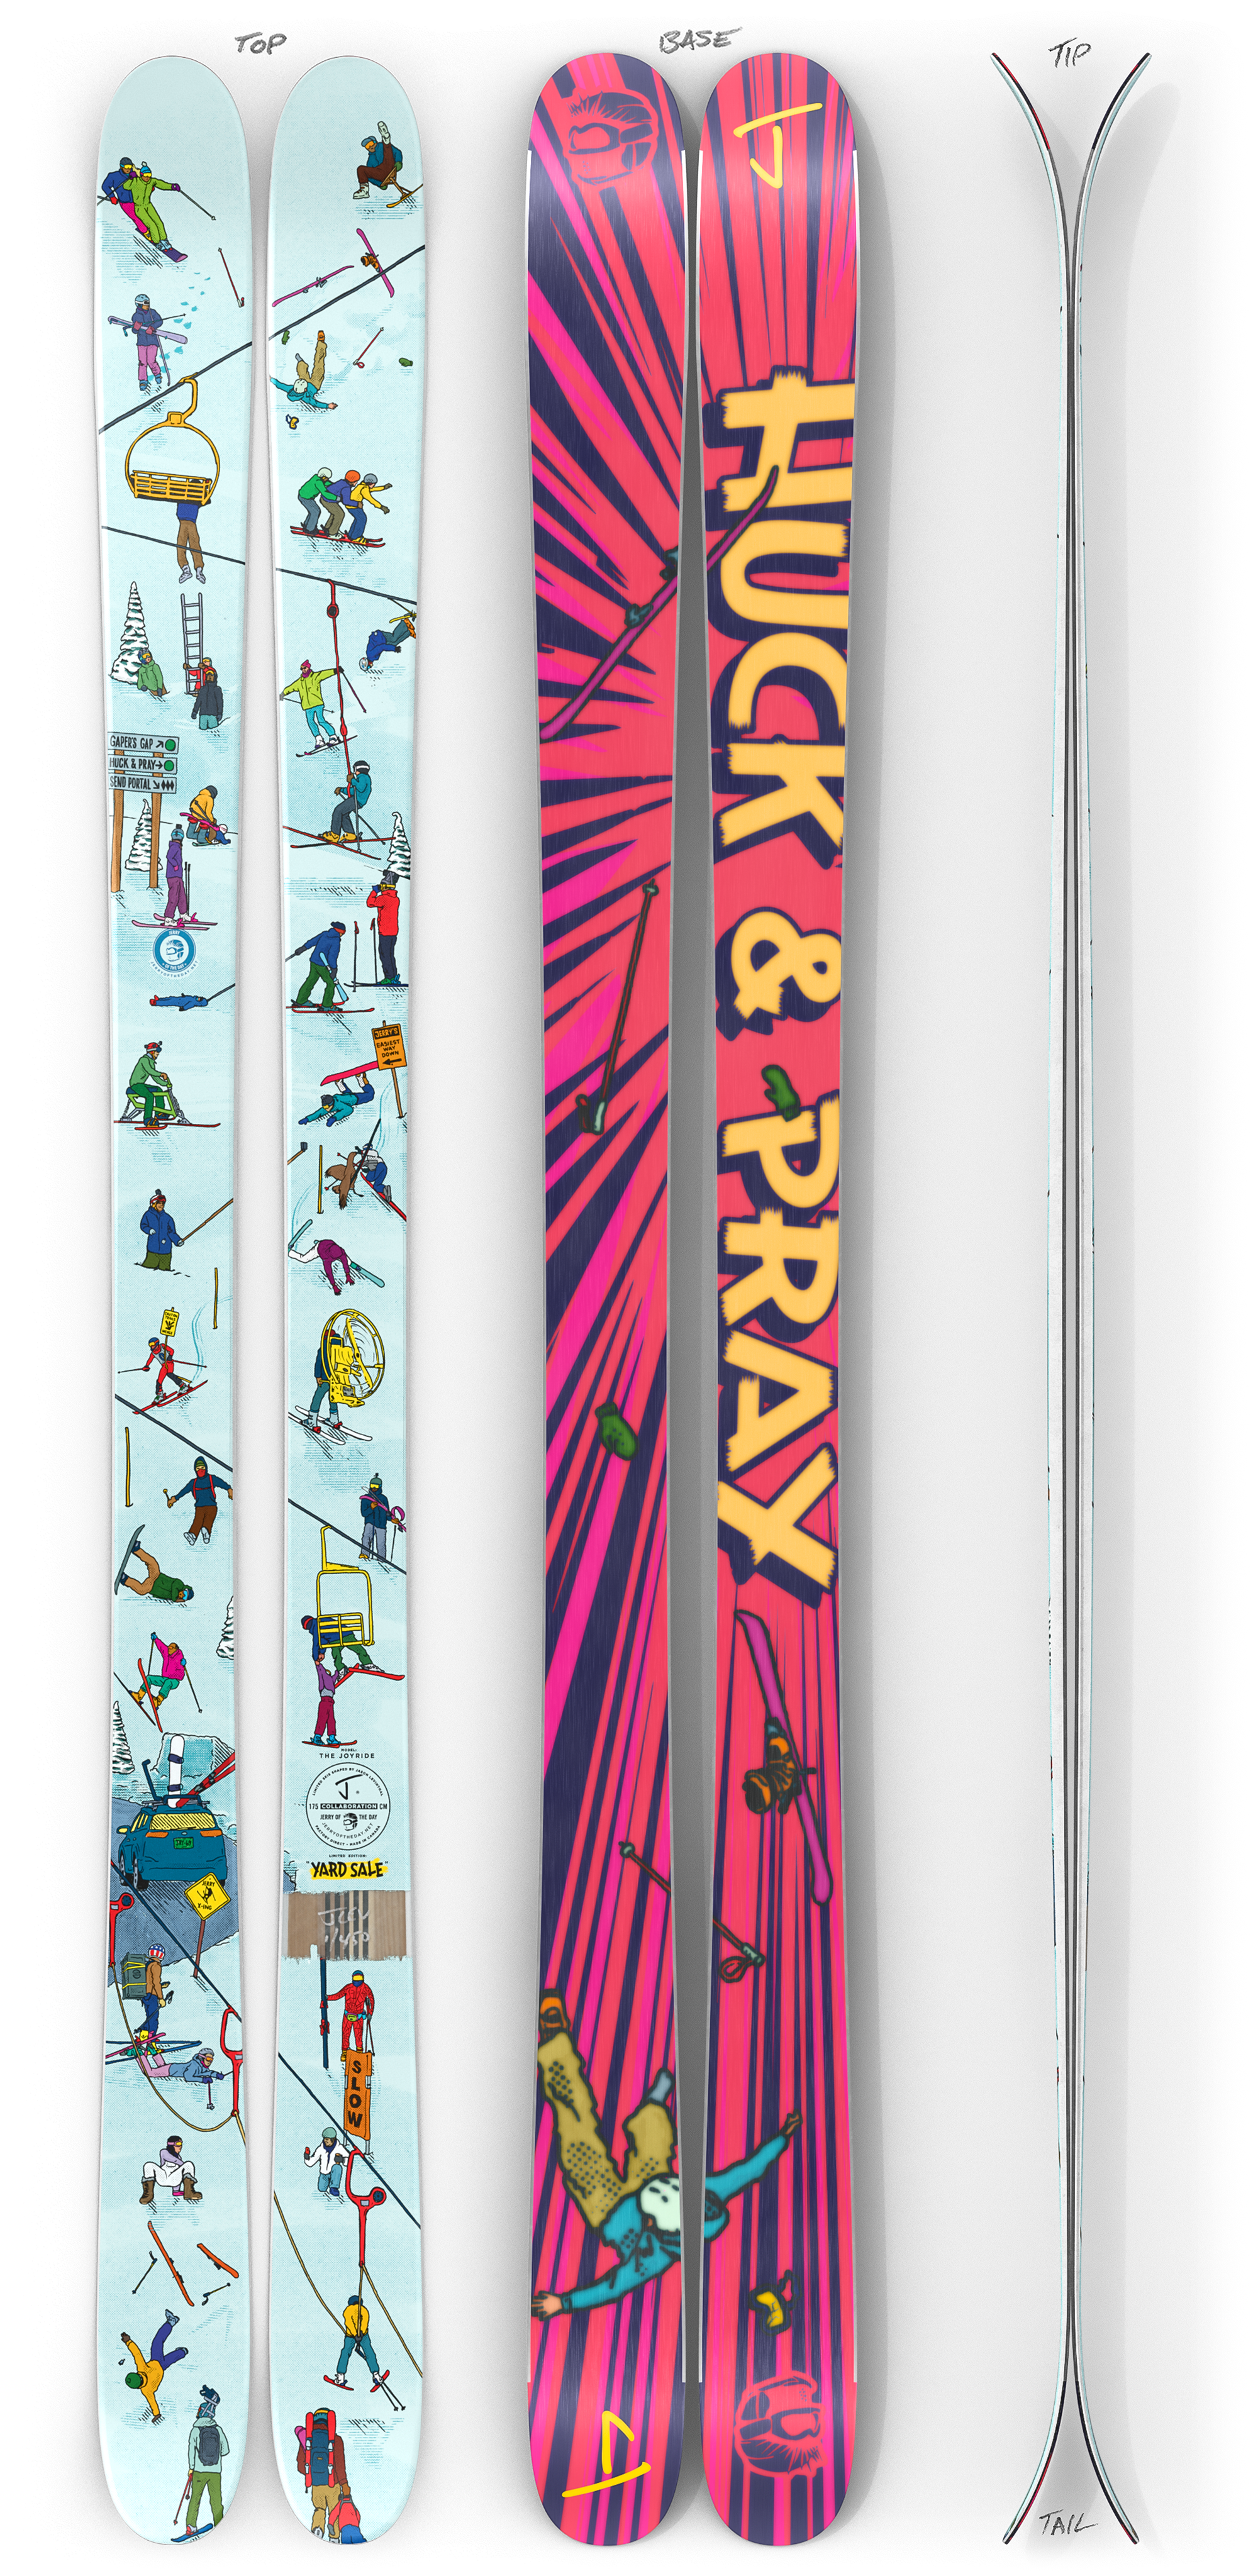 kiespijn Embryo Schat The Joyride "Yardsale" Limited Edition Freestyle All-mtn ski by J – J skis